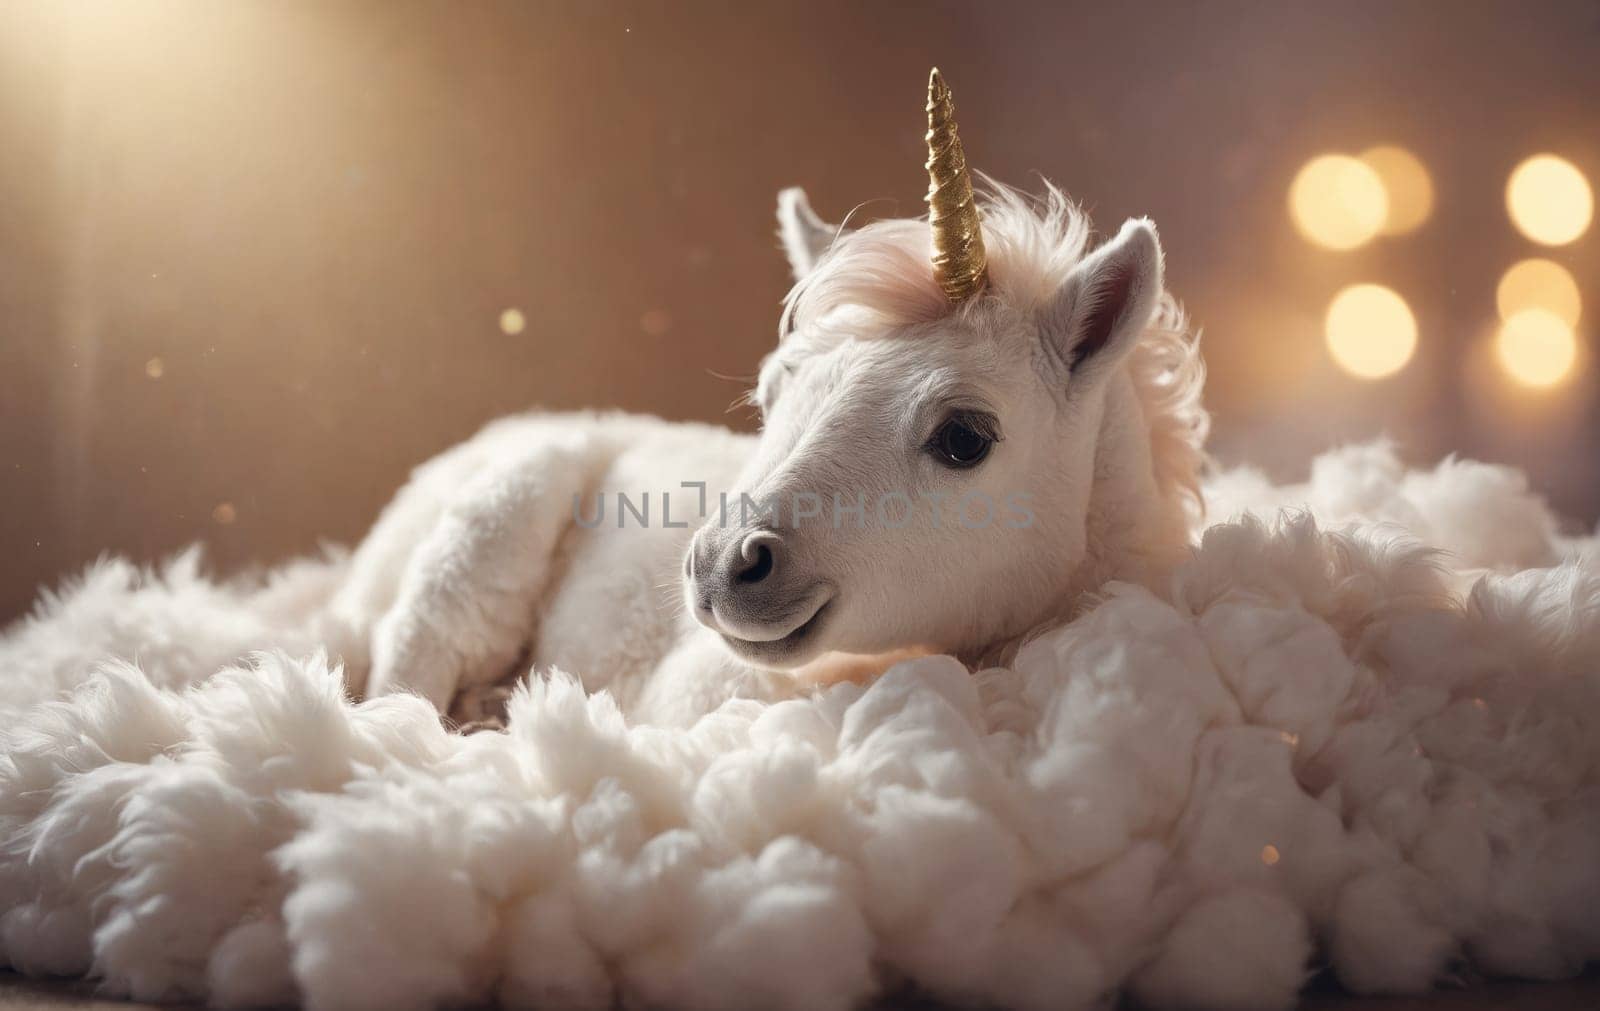 Mythical Elegance – Unicorn Illustration with Vibrant Fantasy Backdrop by Andre1ns